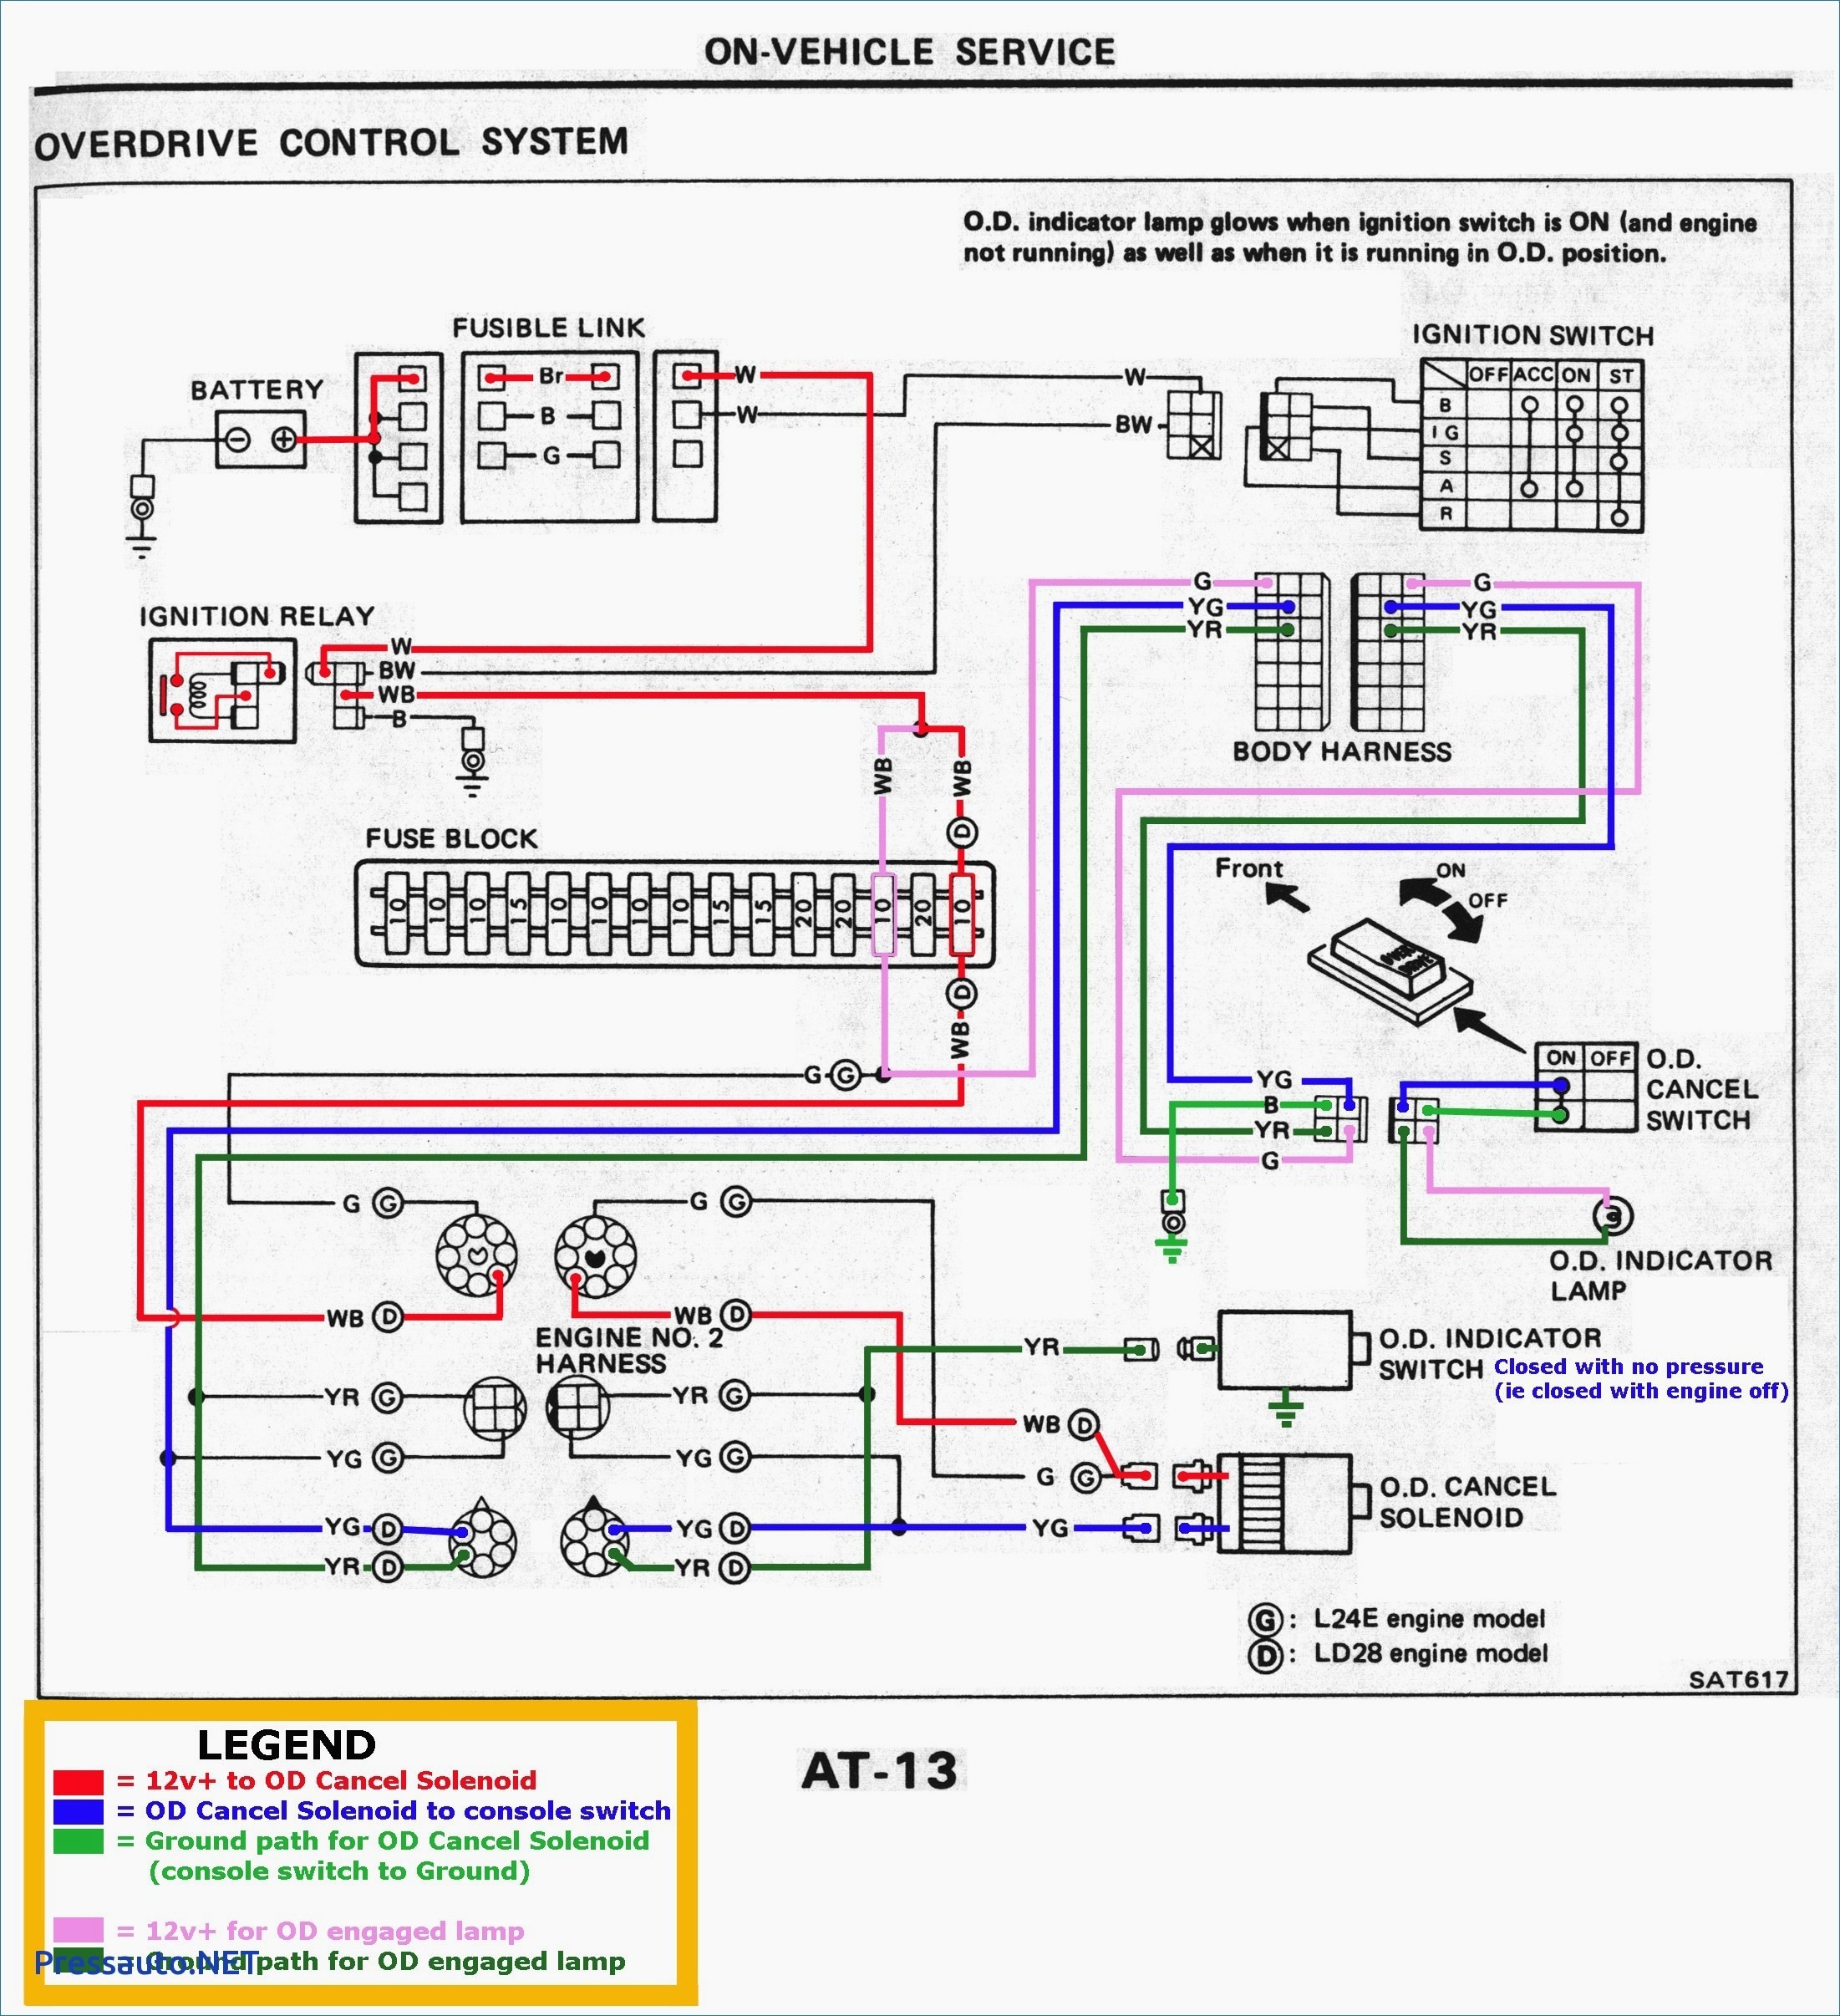 Obd1 Engine Harness Diagram Honda Civic Alternator Wiring Diagram 2019 Civic Alternator Wiring Diagram Of Obd1 Engine Harness Diagram Honda